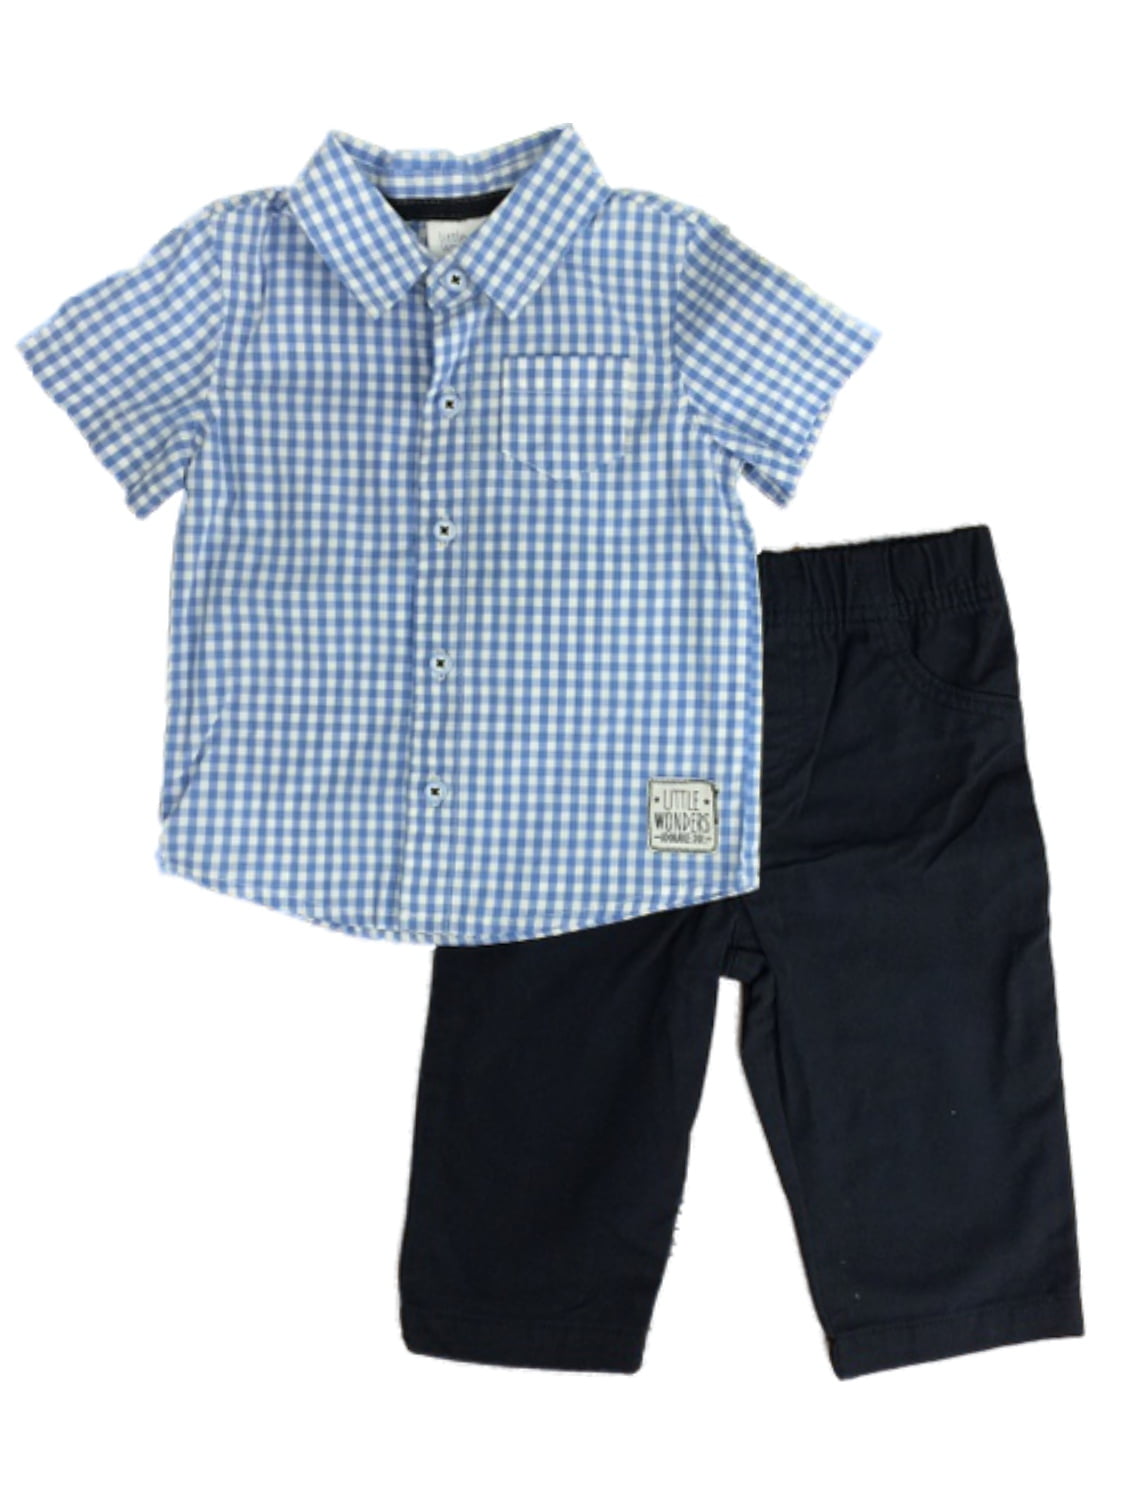 Infant Boys Blue Plaid Baby Outfit Check Button Front Shirt & Khaki ...